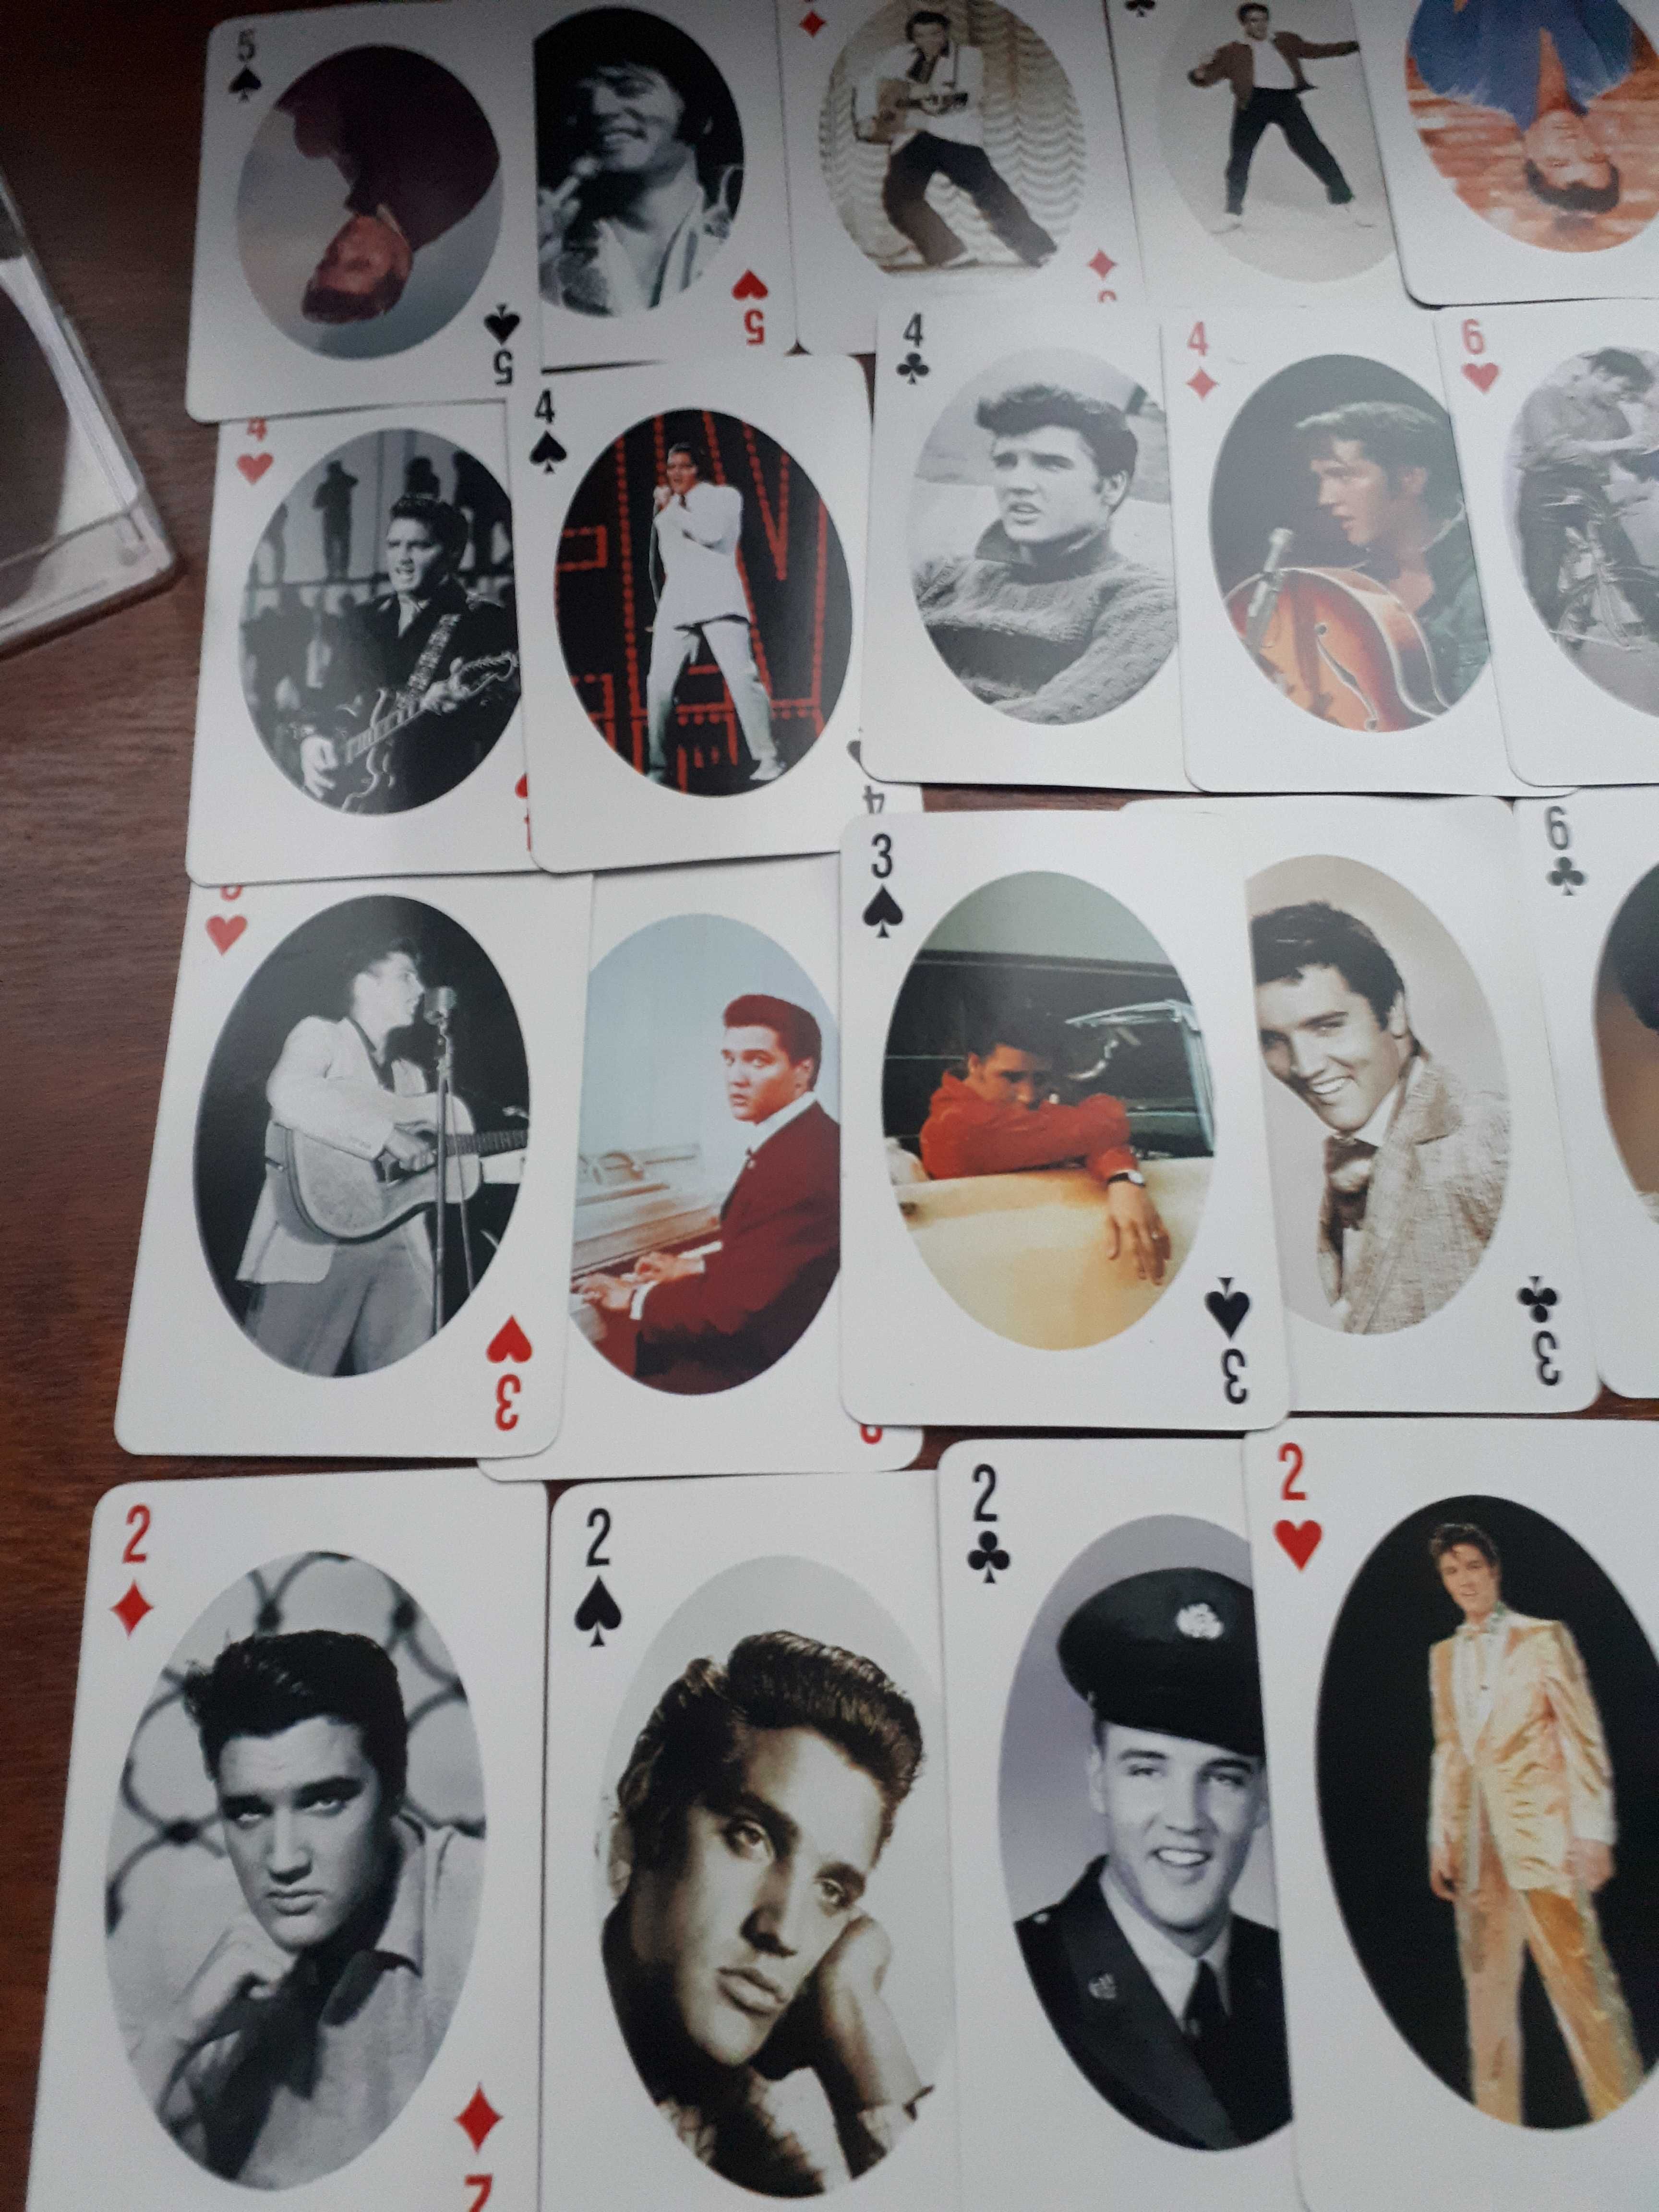 Kolekcjonerskie karty do gry z królem rock&rolla.